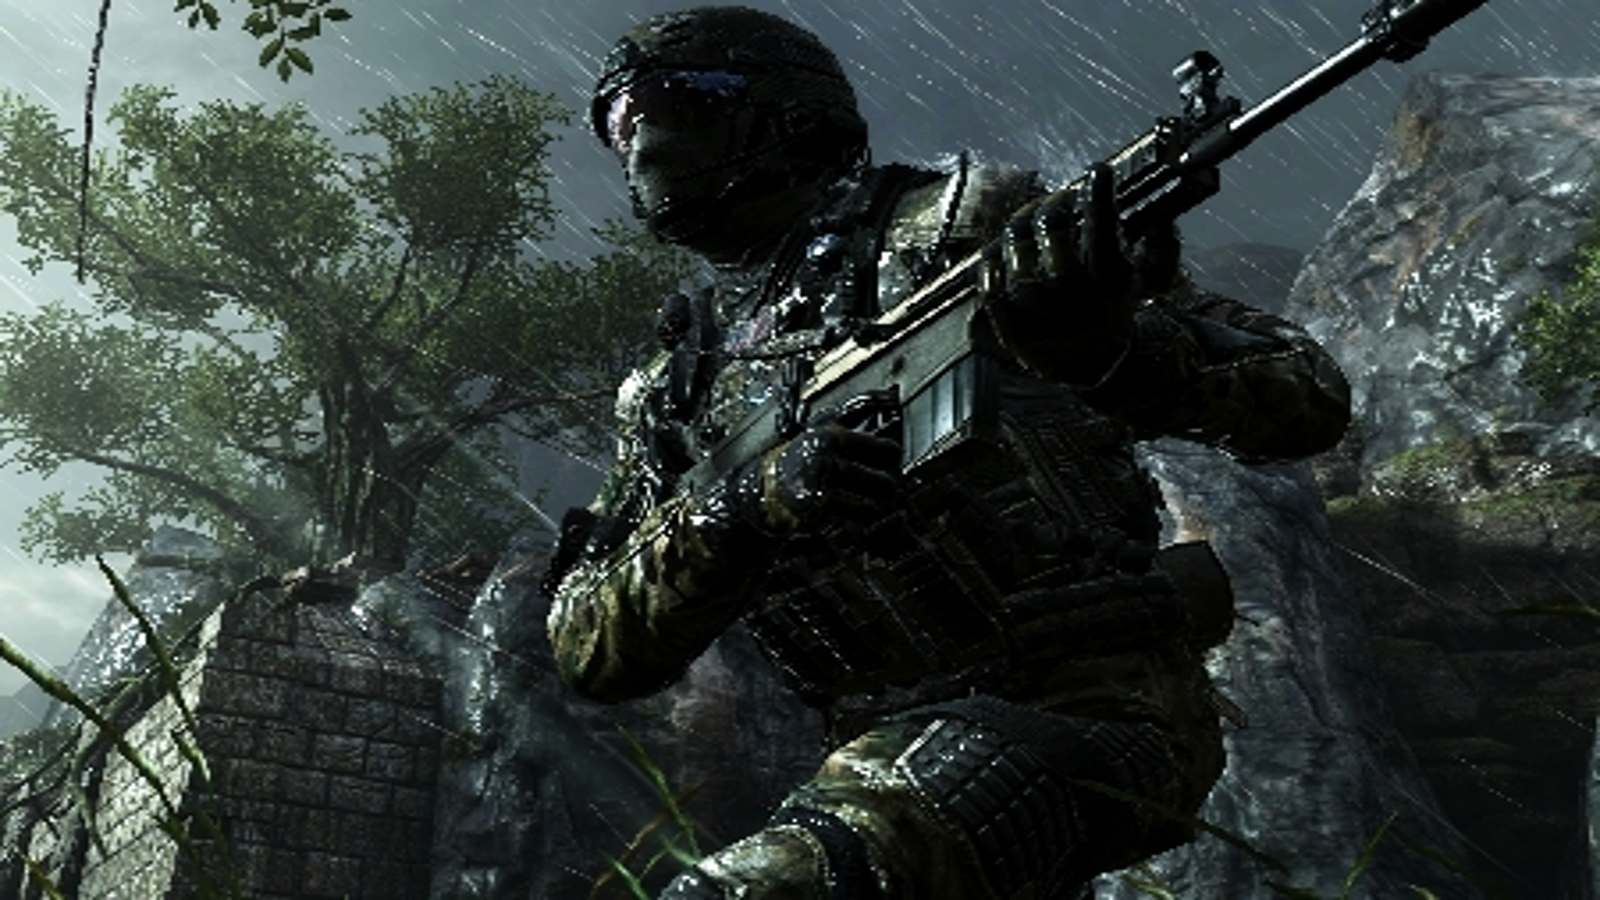 Já podes jogar Call of Duty: Black Ops 2 na Xbox One